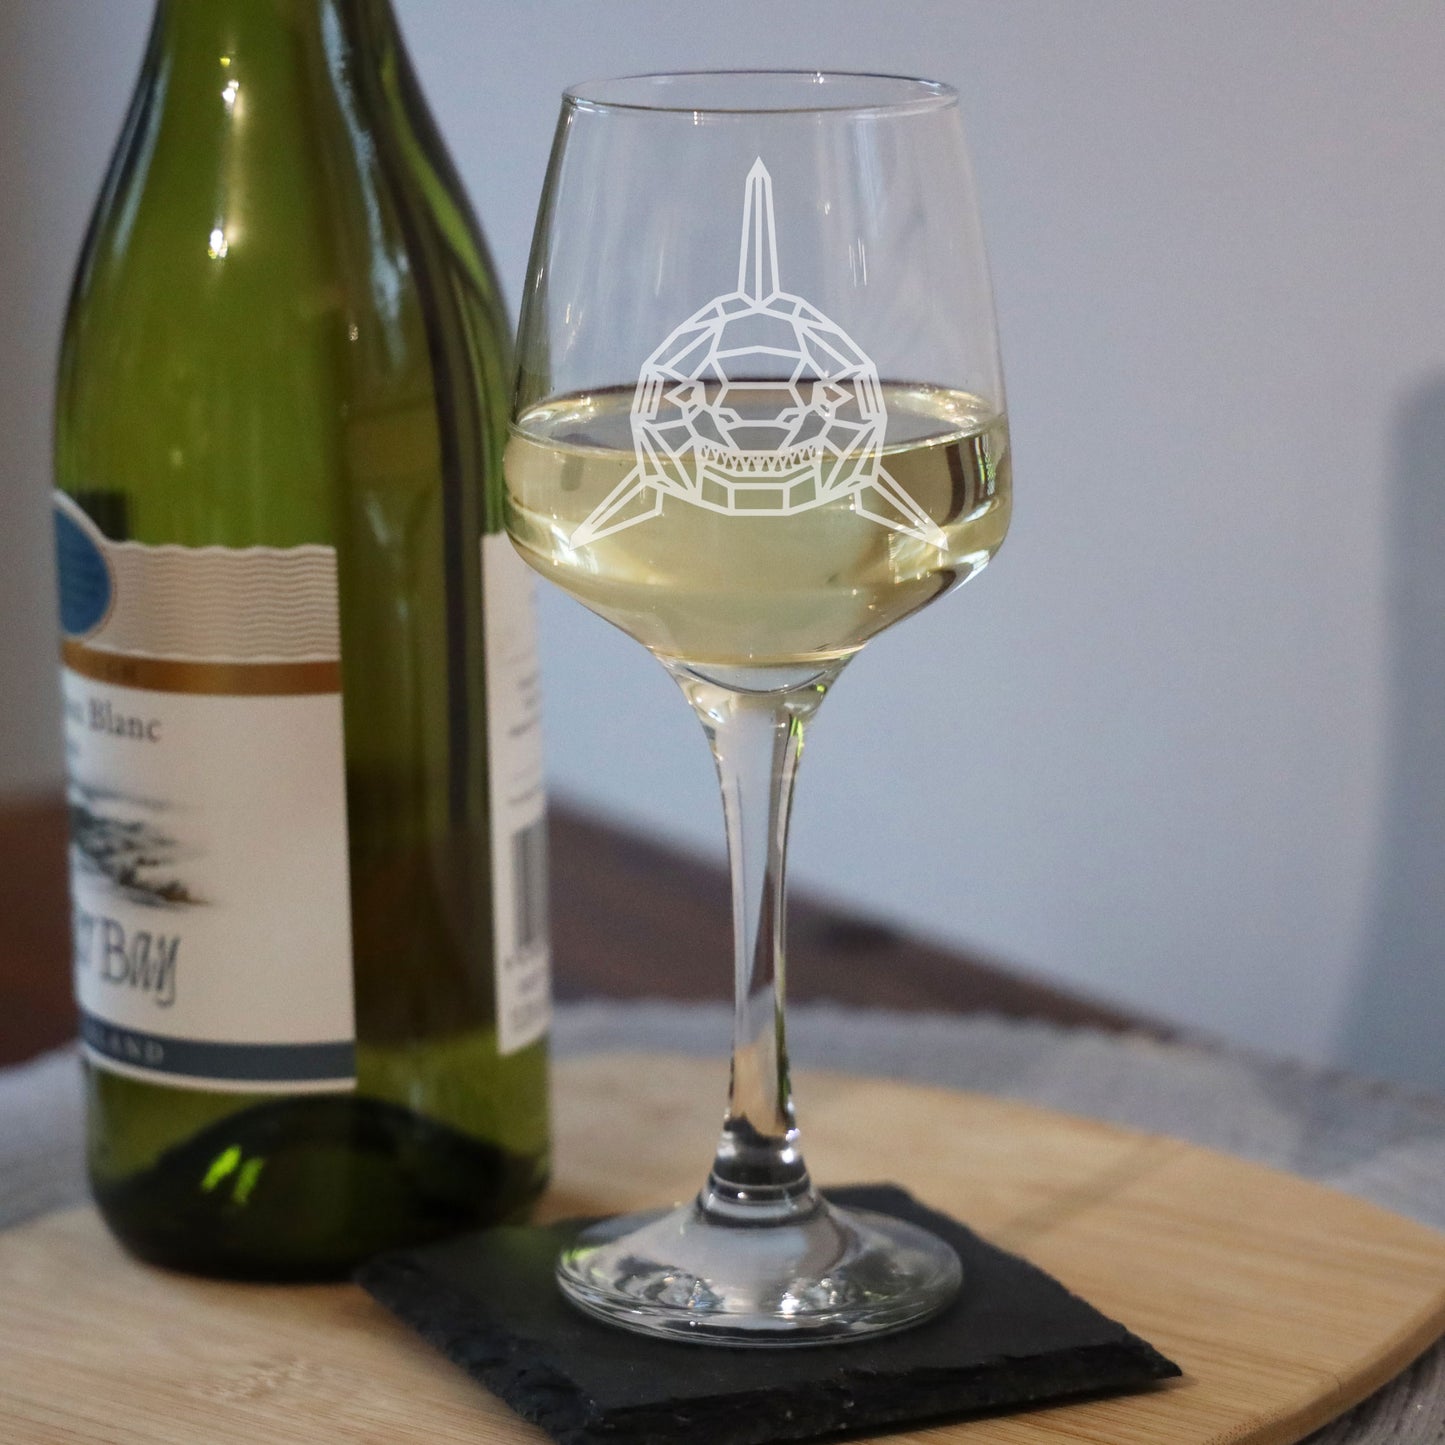 Shark Engraved Wine Glass  - Always Looking Good -   